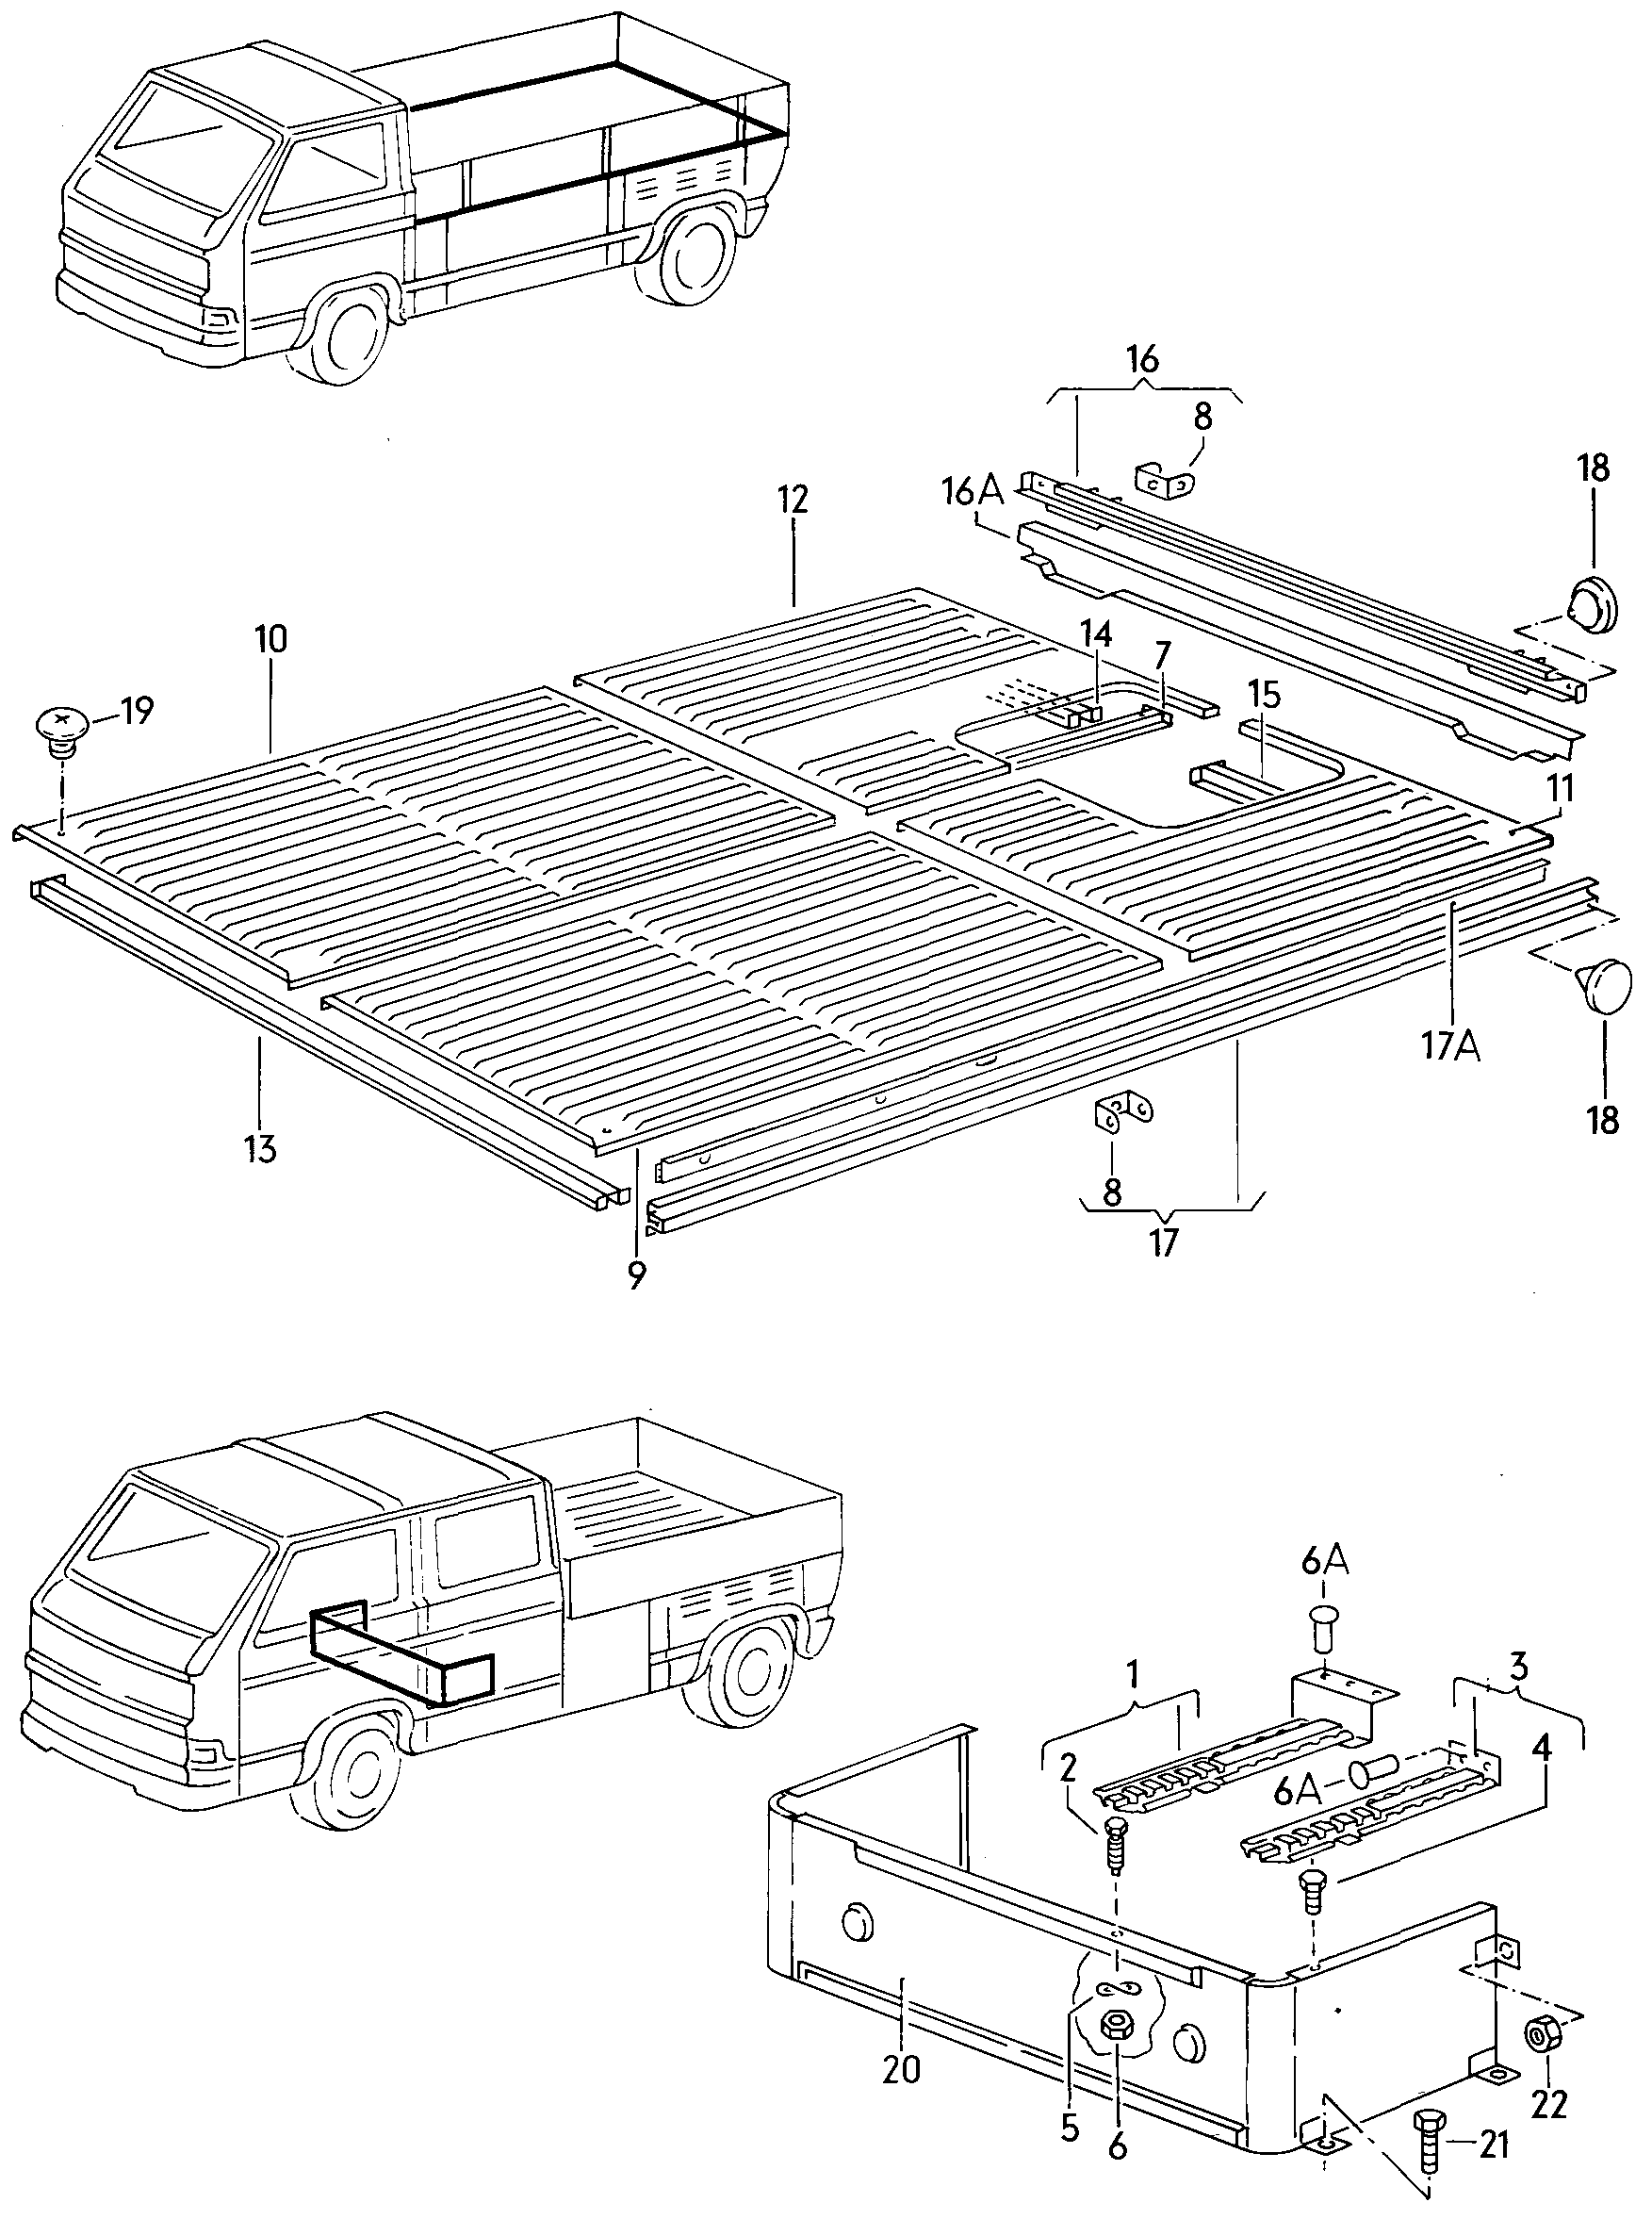 Bodenblech, Sitzkasten,
Laengs- und Quertraeger - Typ 2/syncro(T2)  